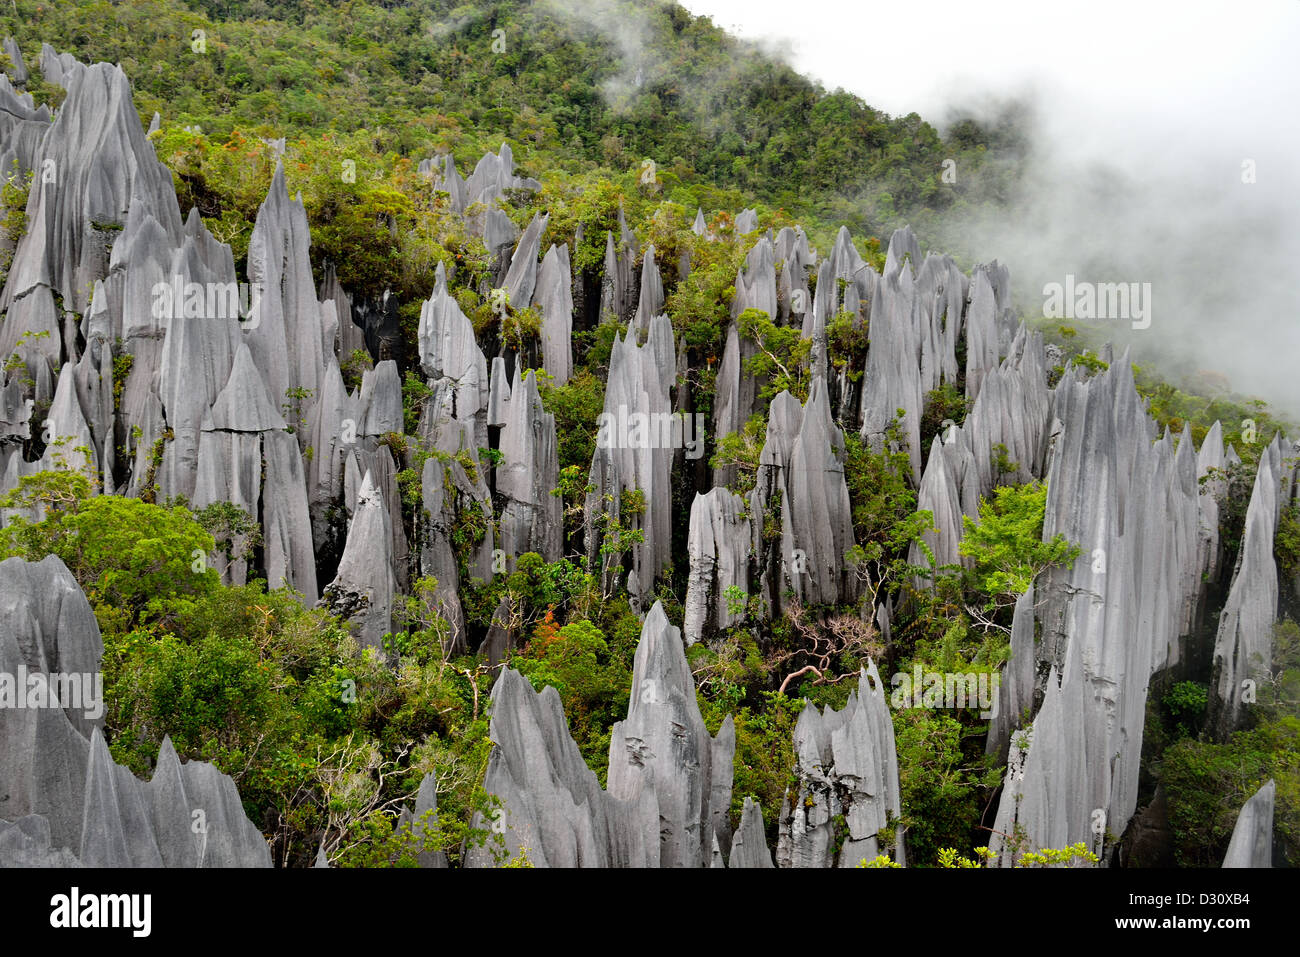 Kalkstein Pinnacles Mount API, Gunung Mulu National Park. Sarawak, Borneo, Malaysia. Stockfoto